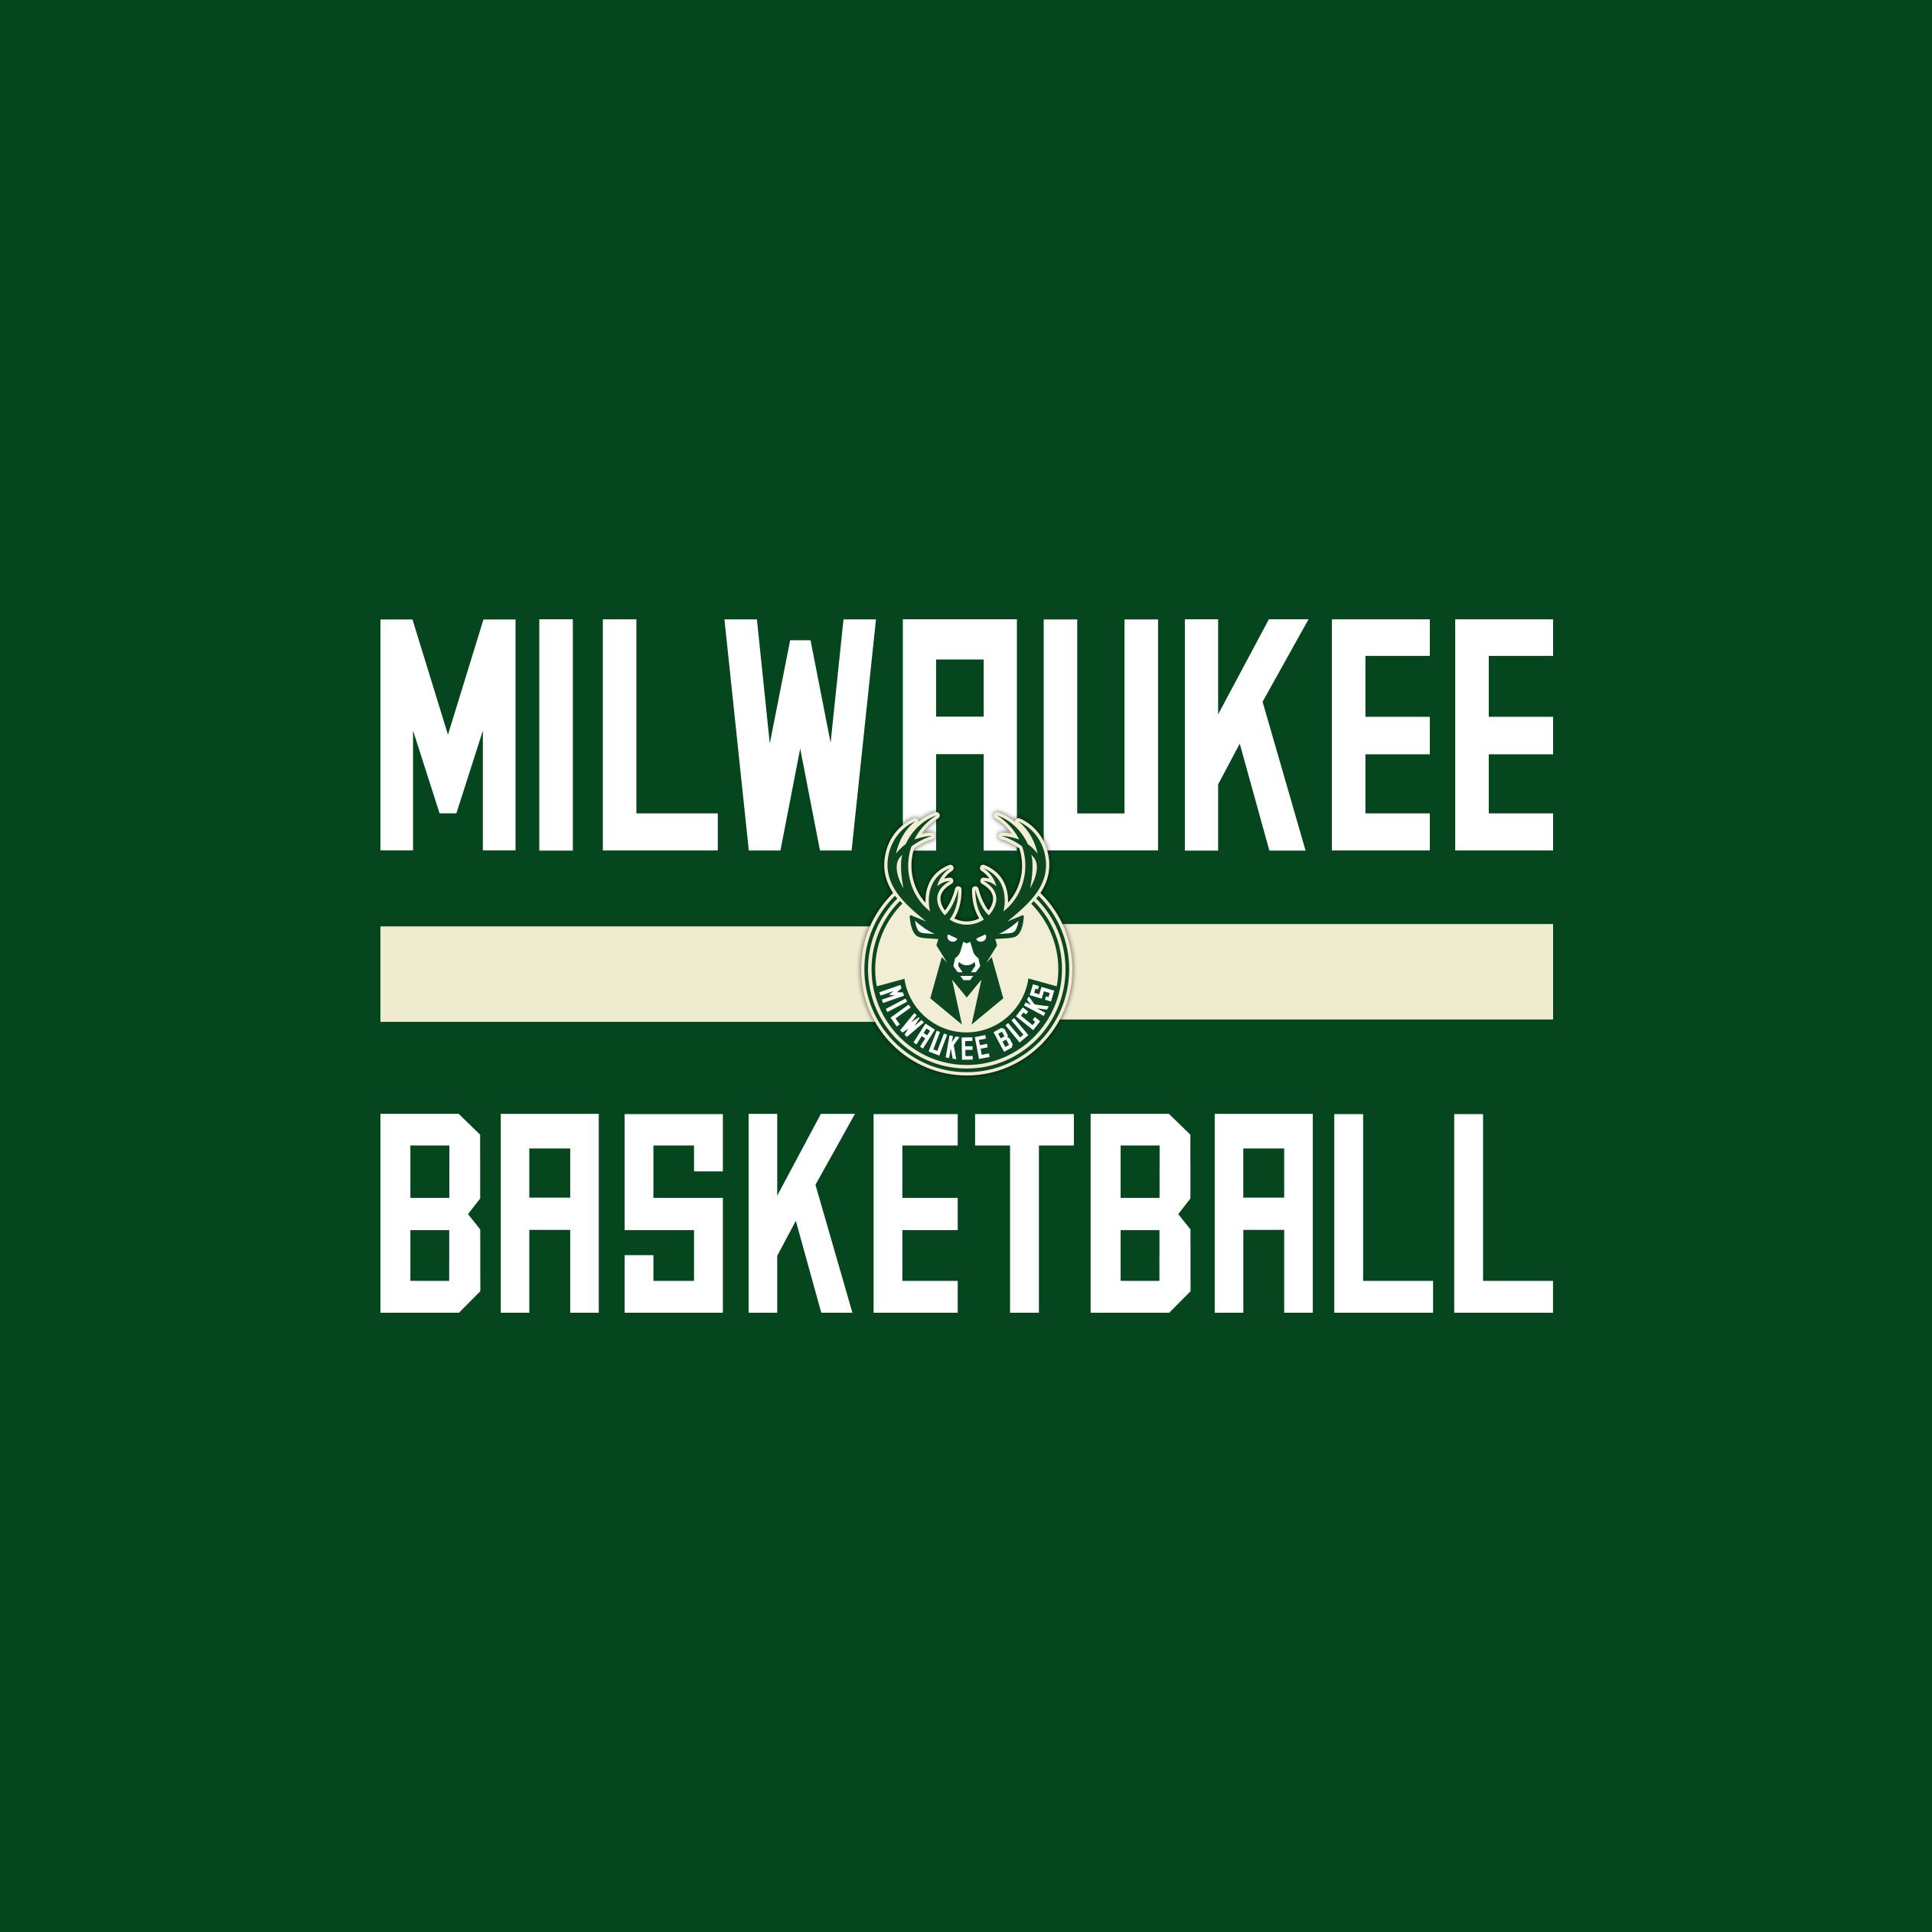 Milwaukee Bucks Wallpaper Pk471 Full HD Pictures